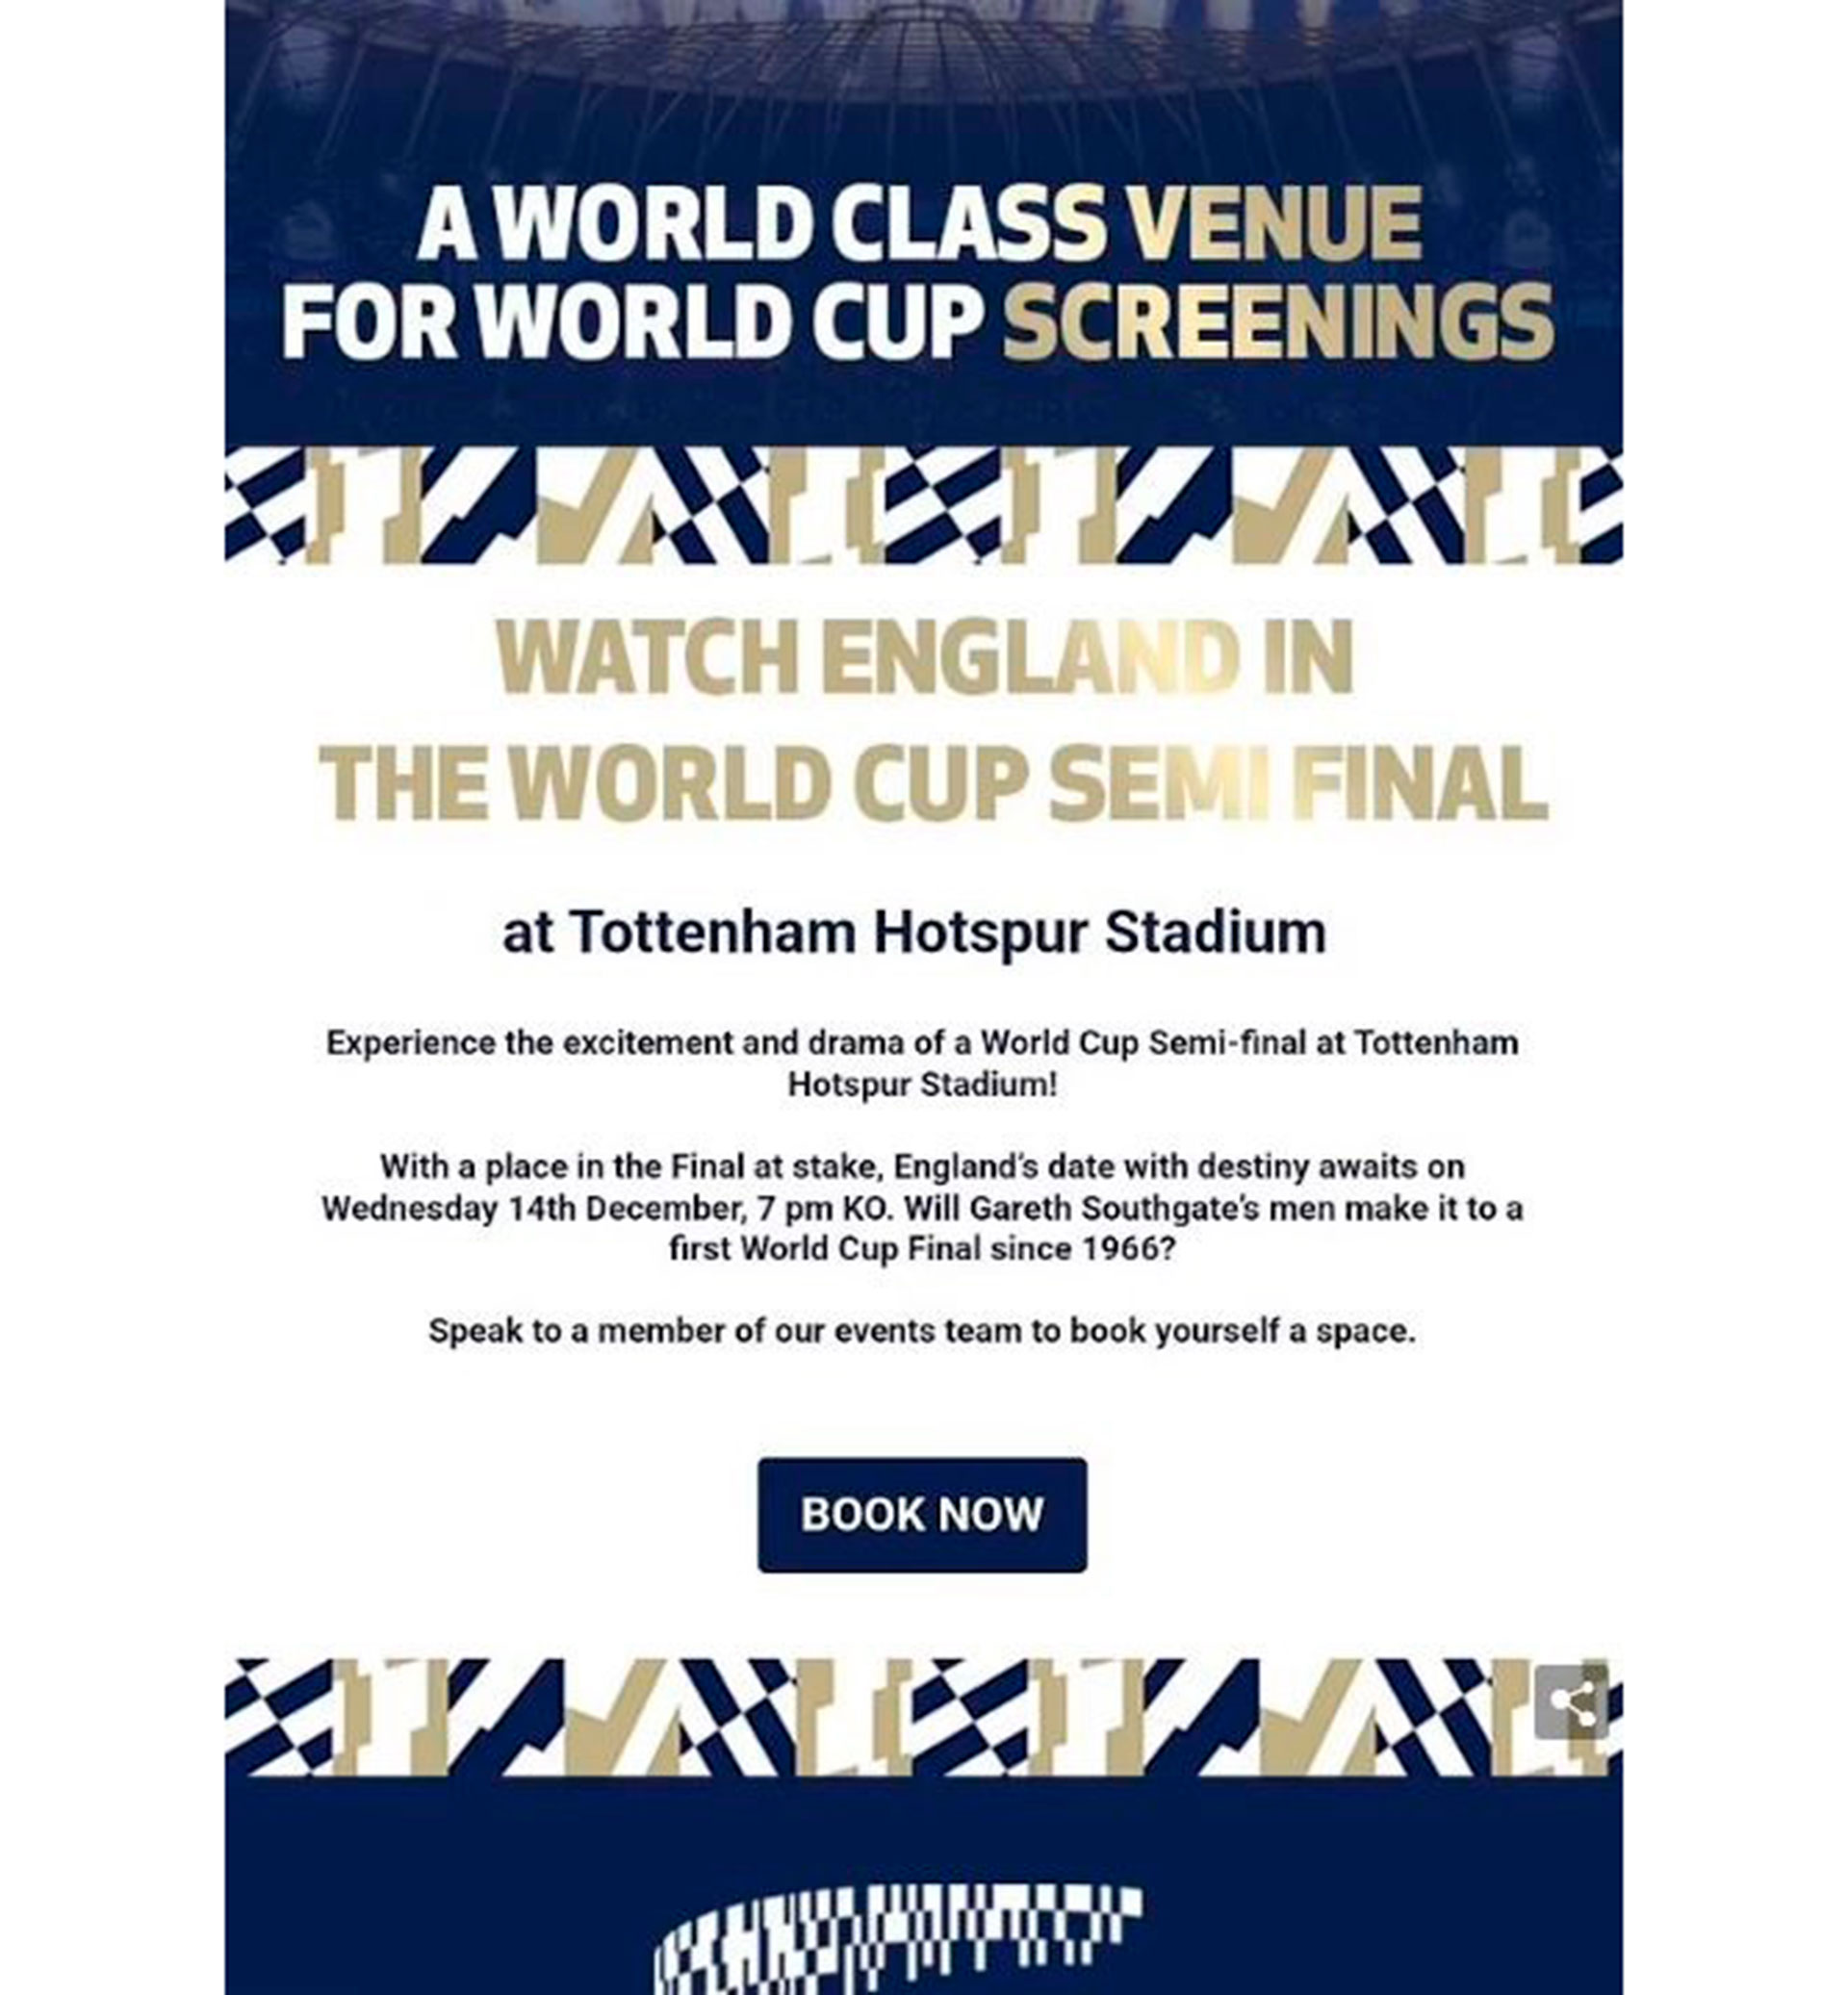 El error del Tottenham al invitar a sus socios a ver la semifinal del Mundial